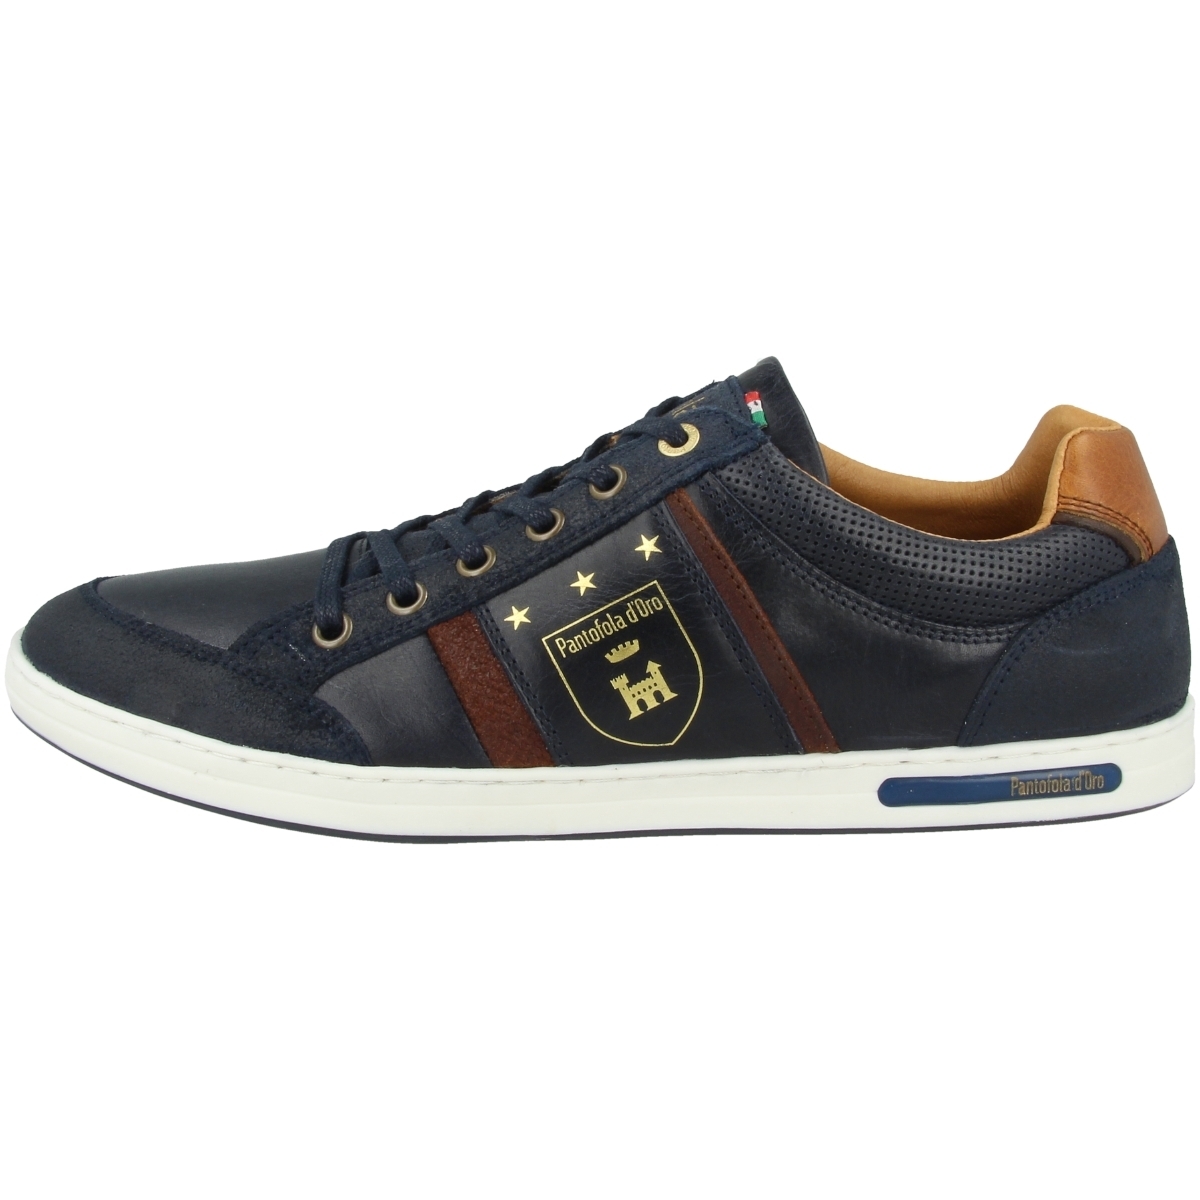 Pantofola d'Oro Mondovi Uomo Low Sneaker low blau